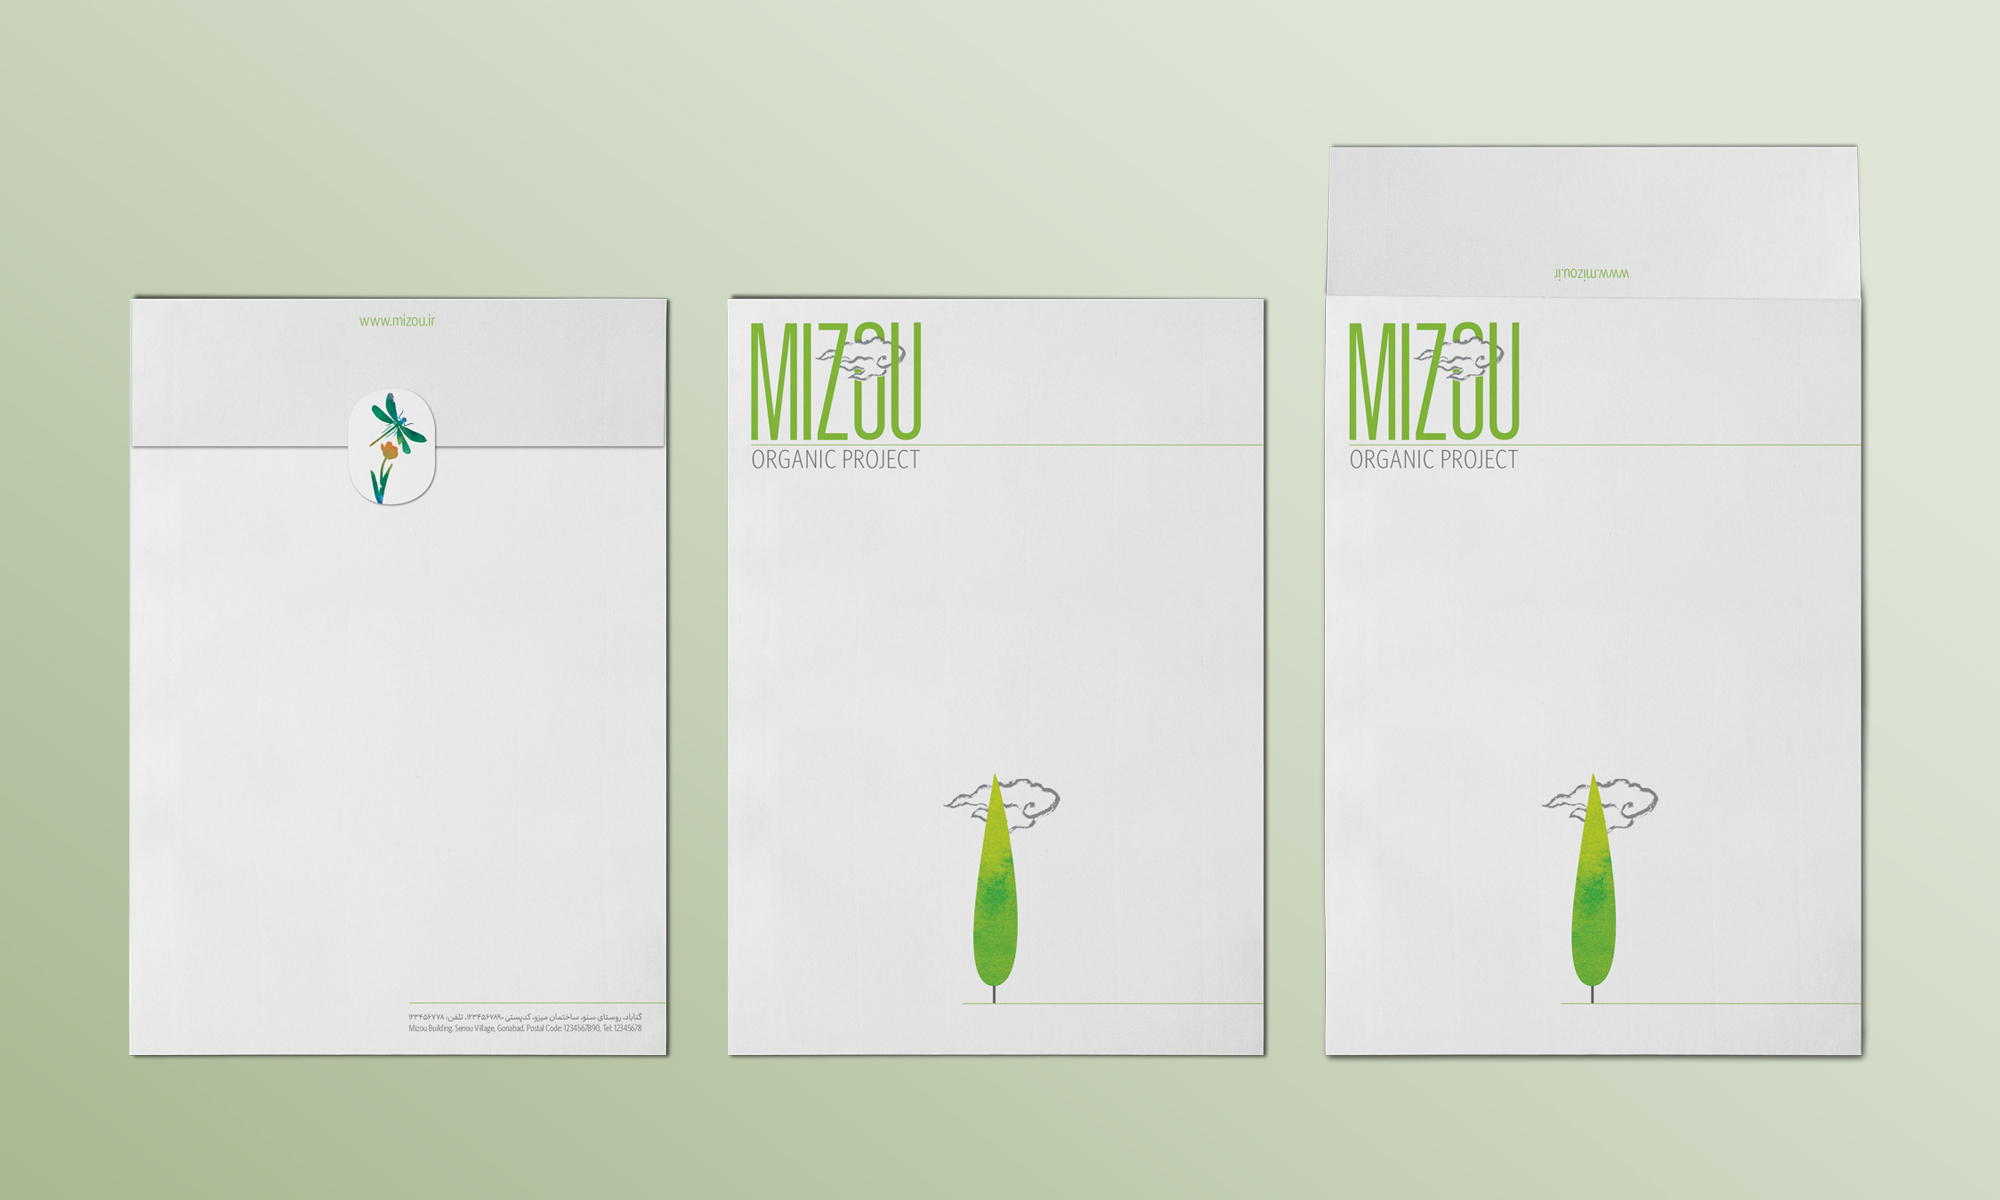 Mizou Organic Project